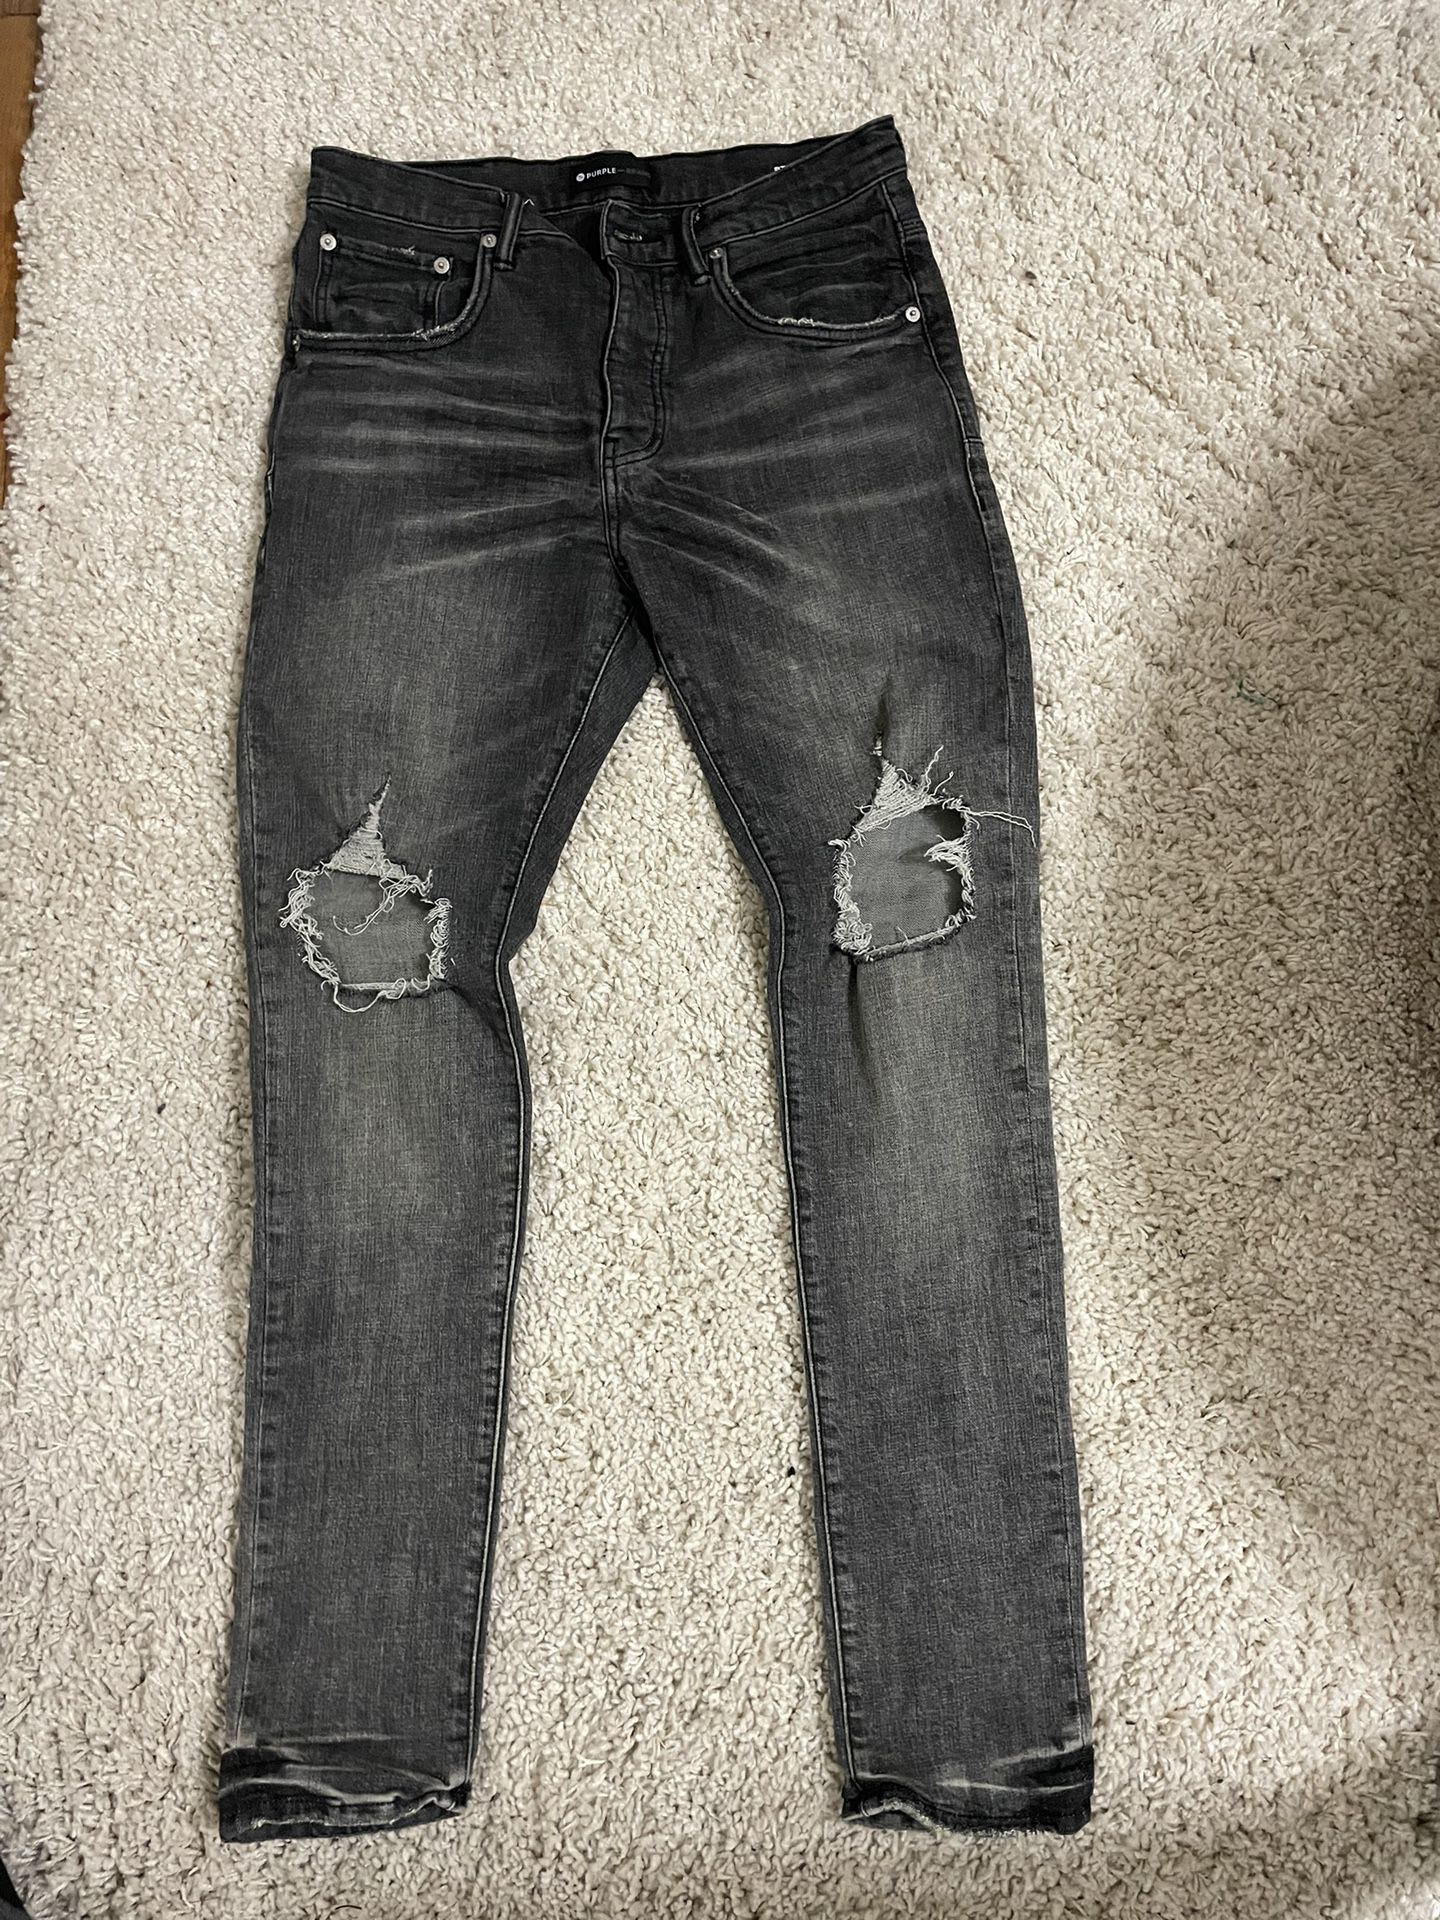 Size 31 Purple jeans 